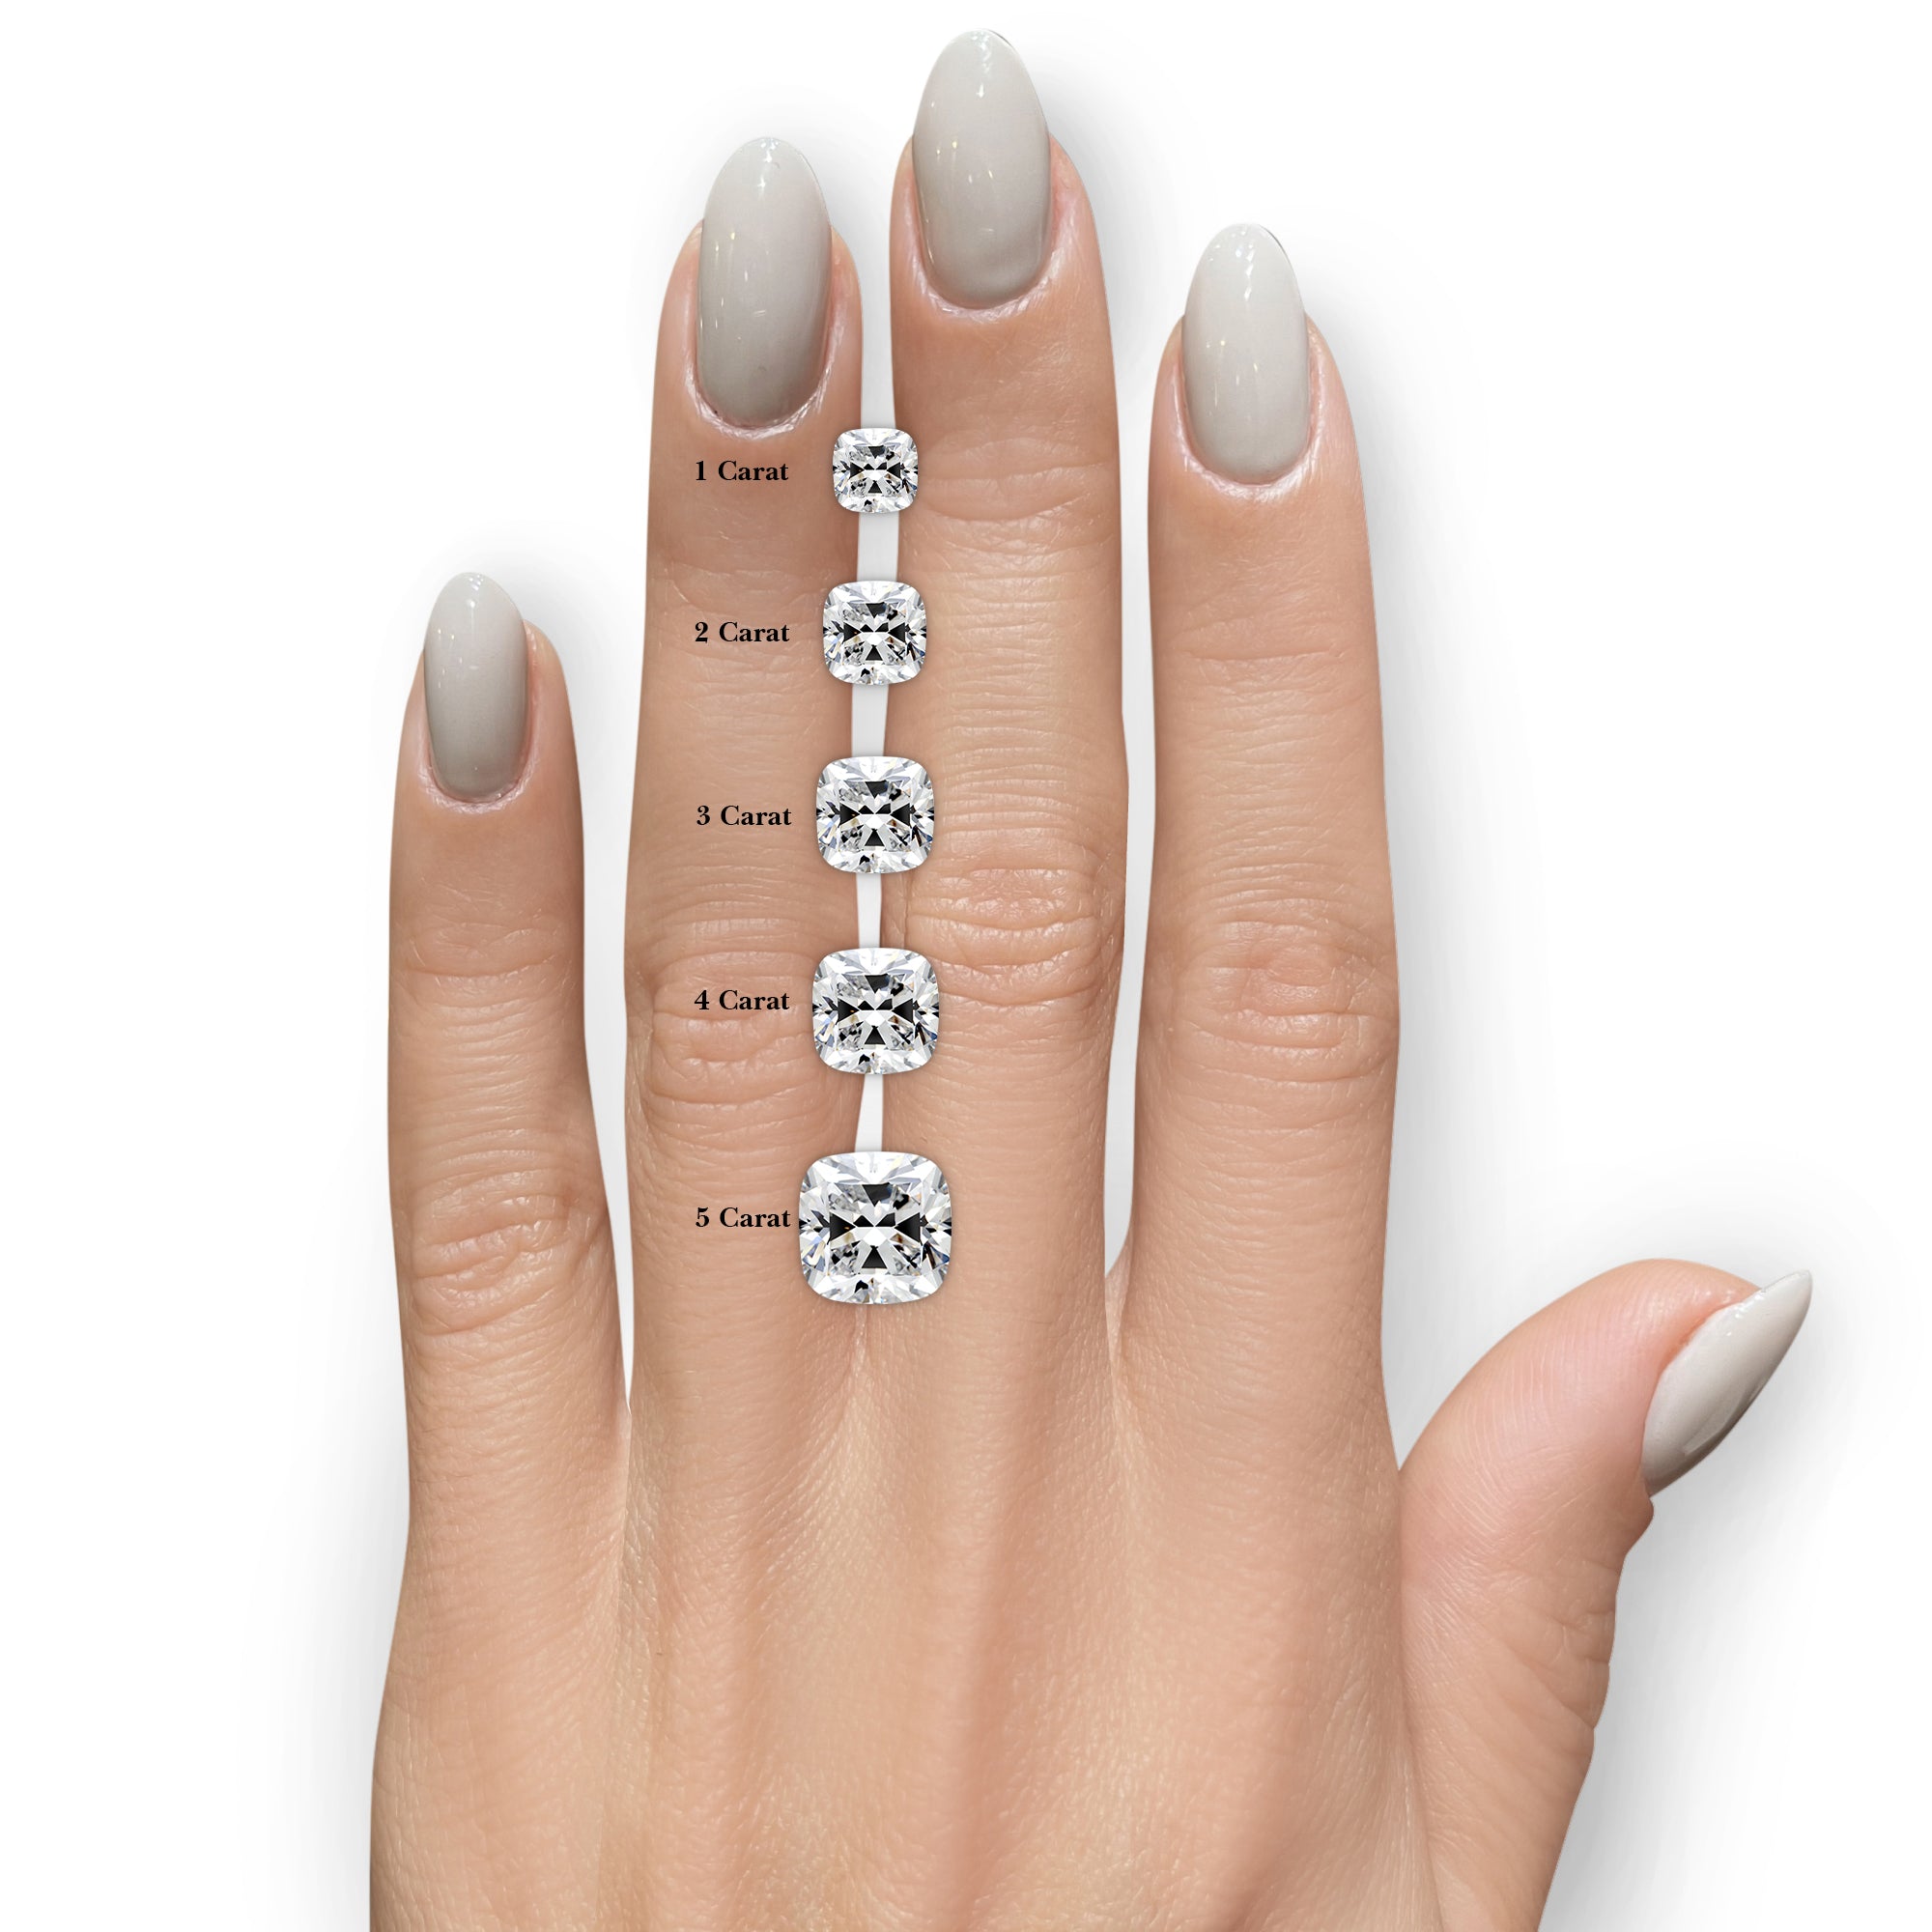 Emery Diamond Engagement Ring - 14K White Gold